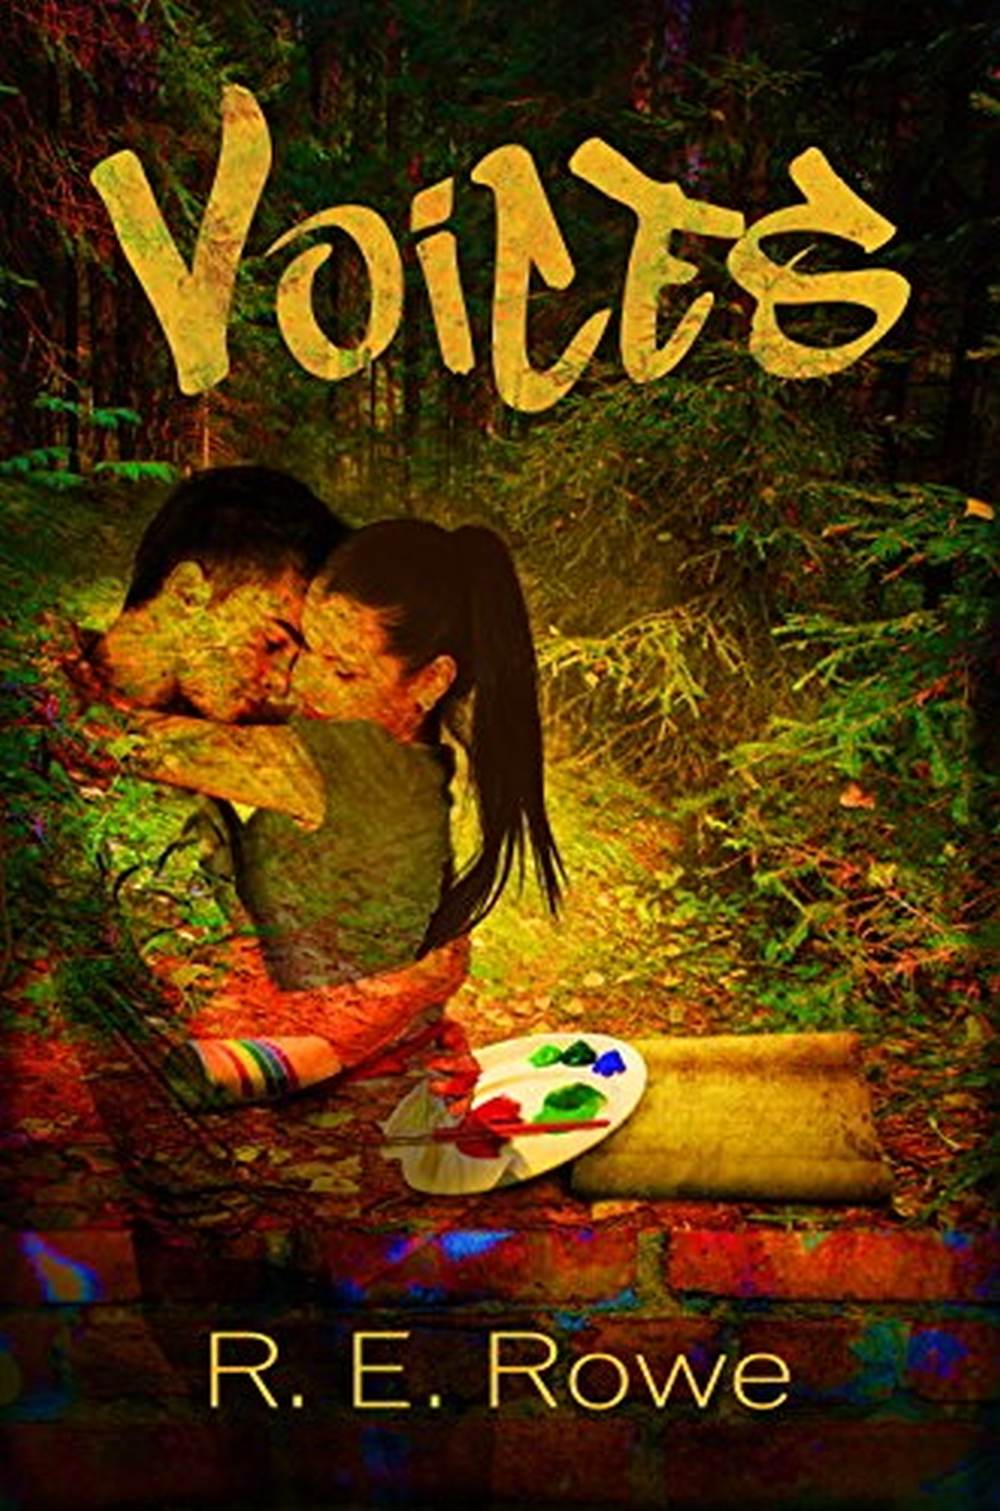 Cover des Buches "Voices" von R. E. Rowe